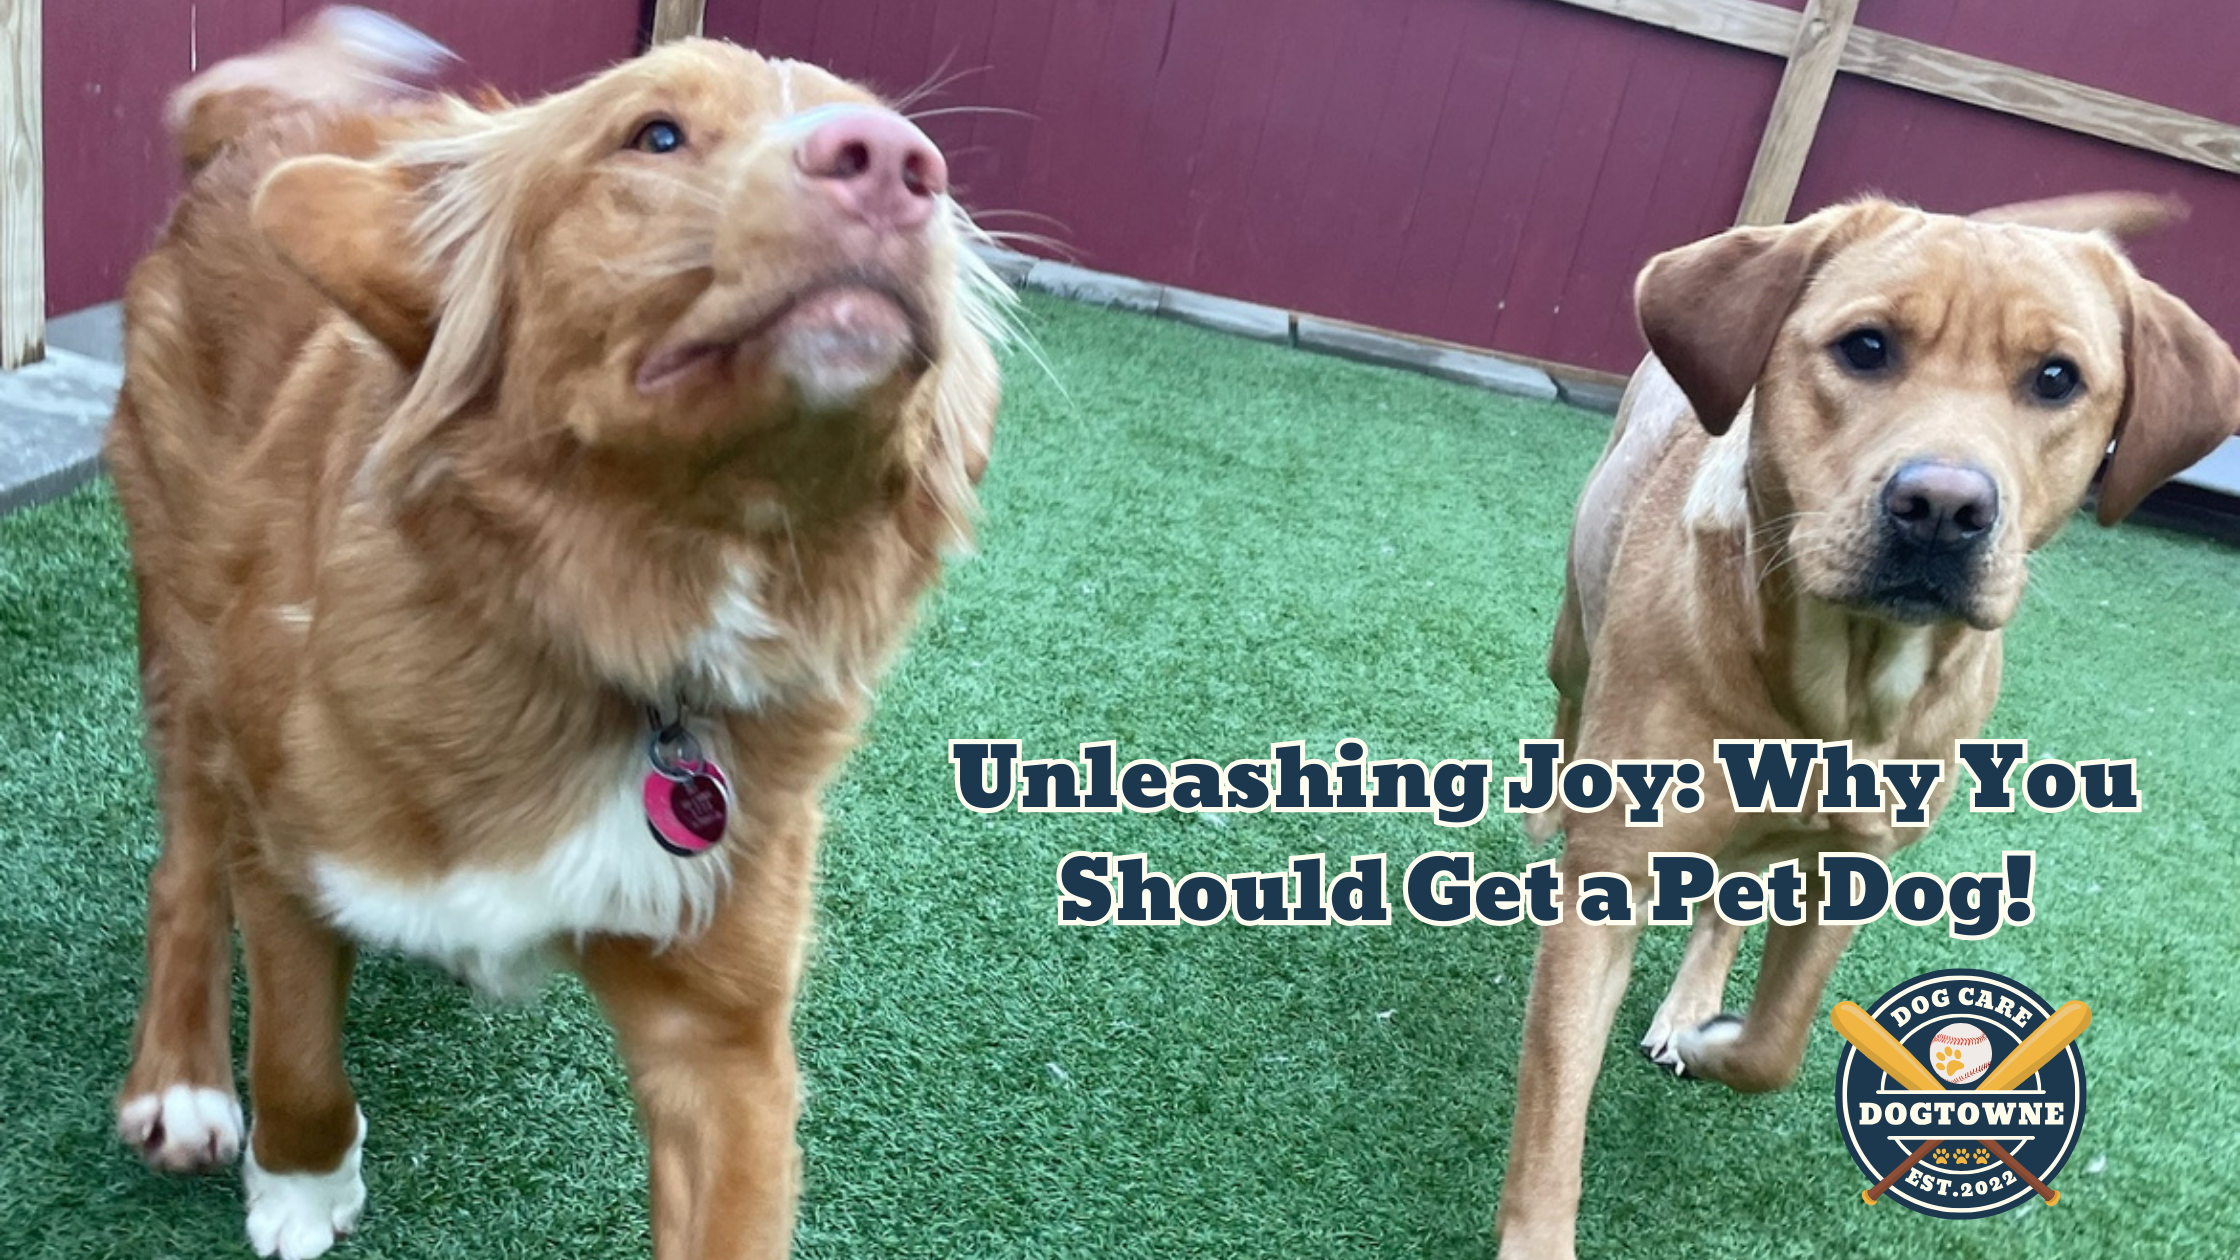 Unleashing Joy: Why You Should Get a Pet Dog!